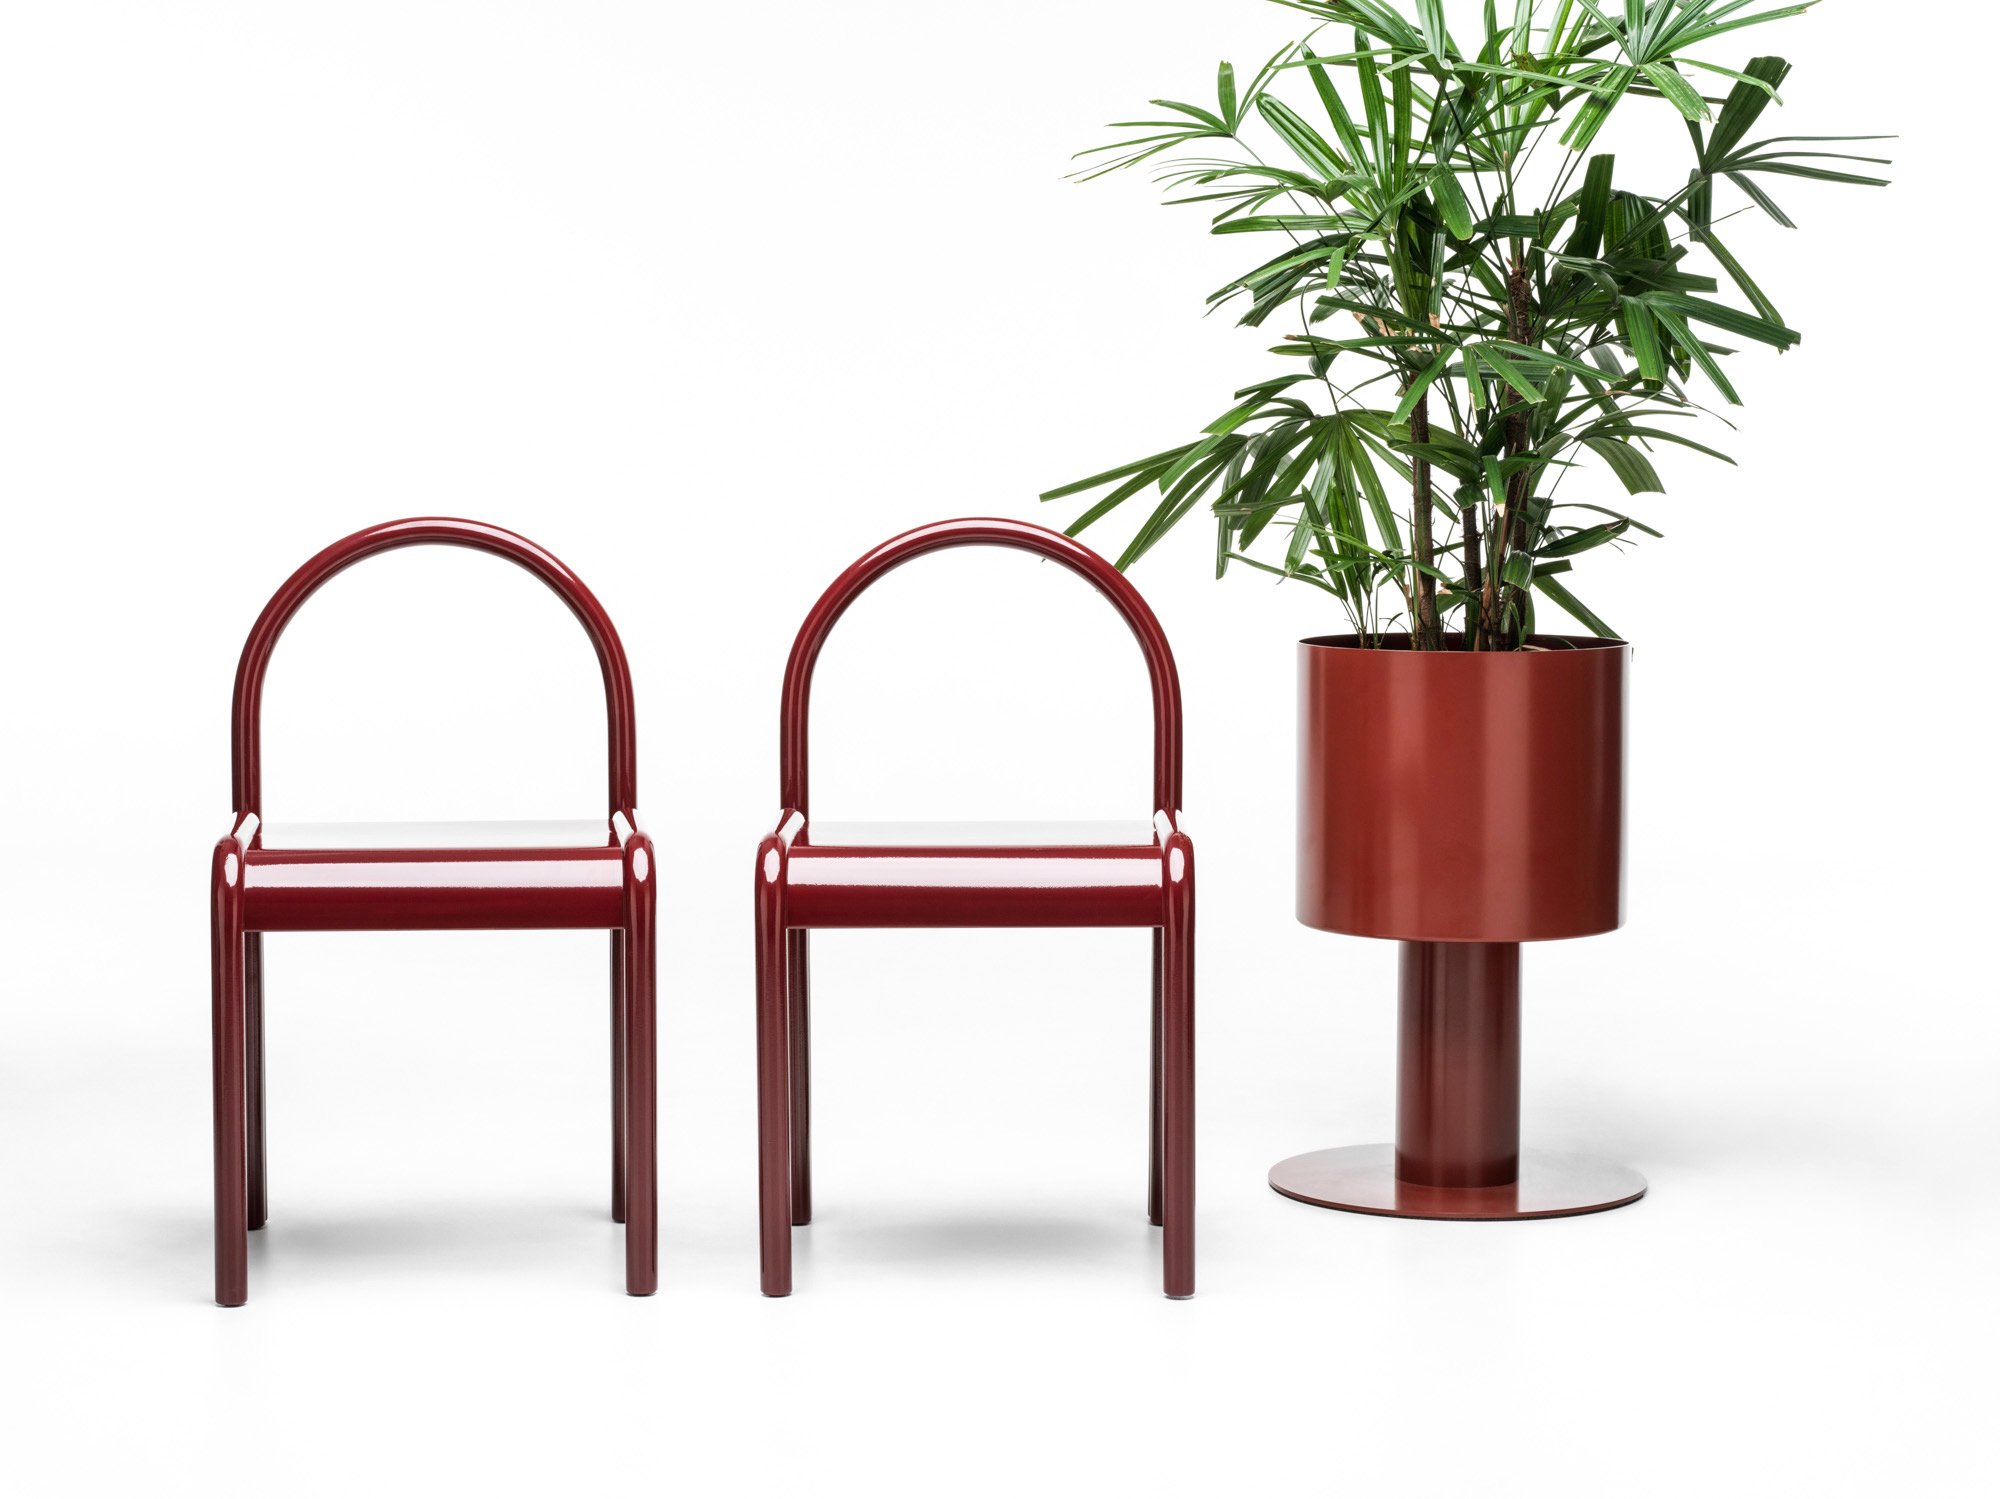 b6-halo-studiociao-ciao-planters-polished-stainless-steel-fluoro.jpg